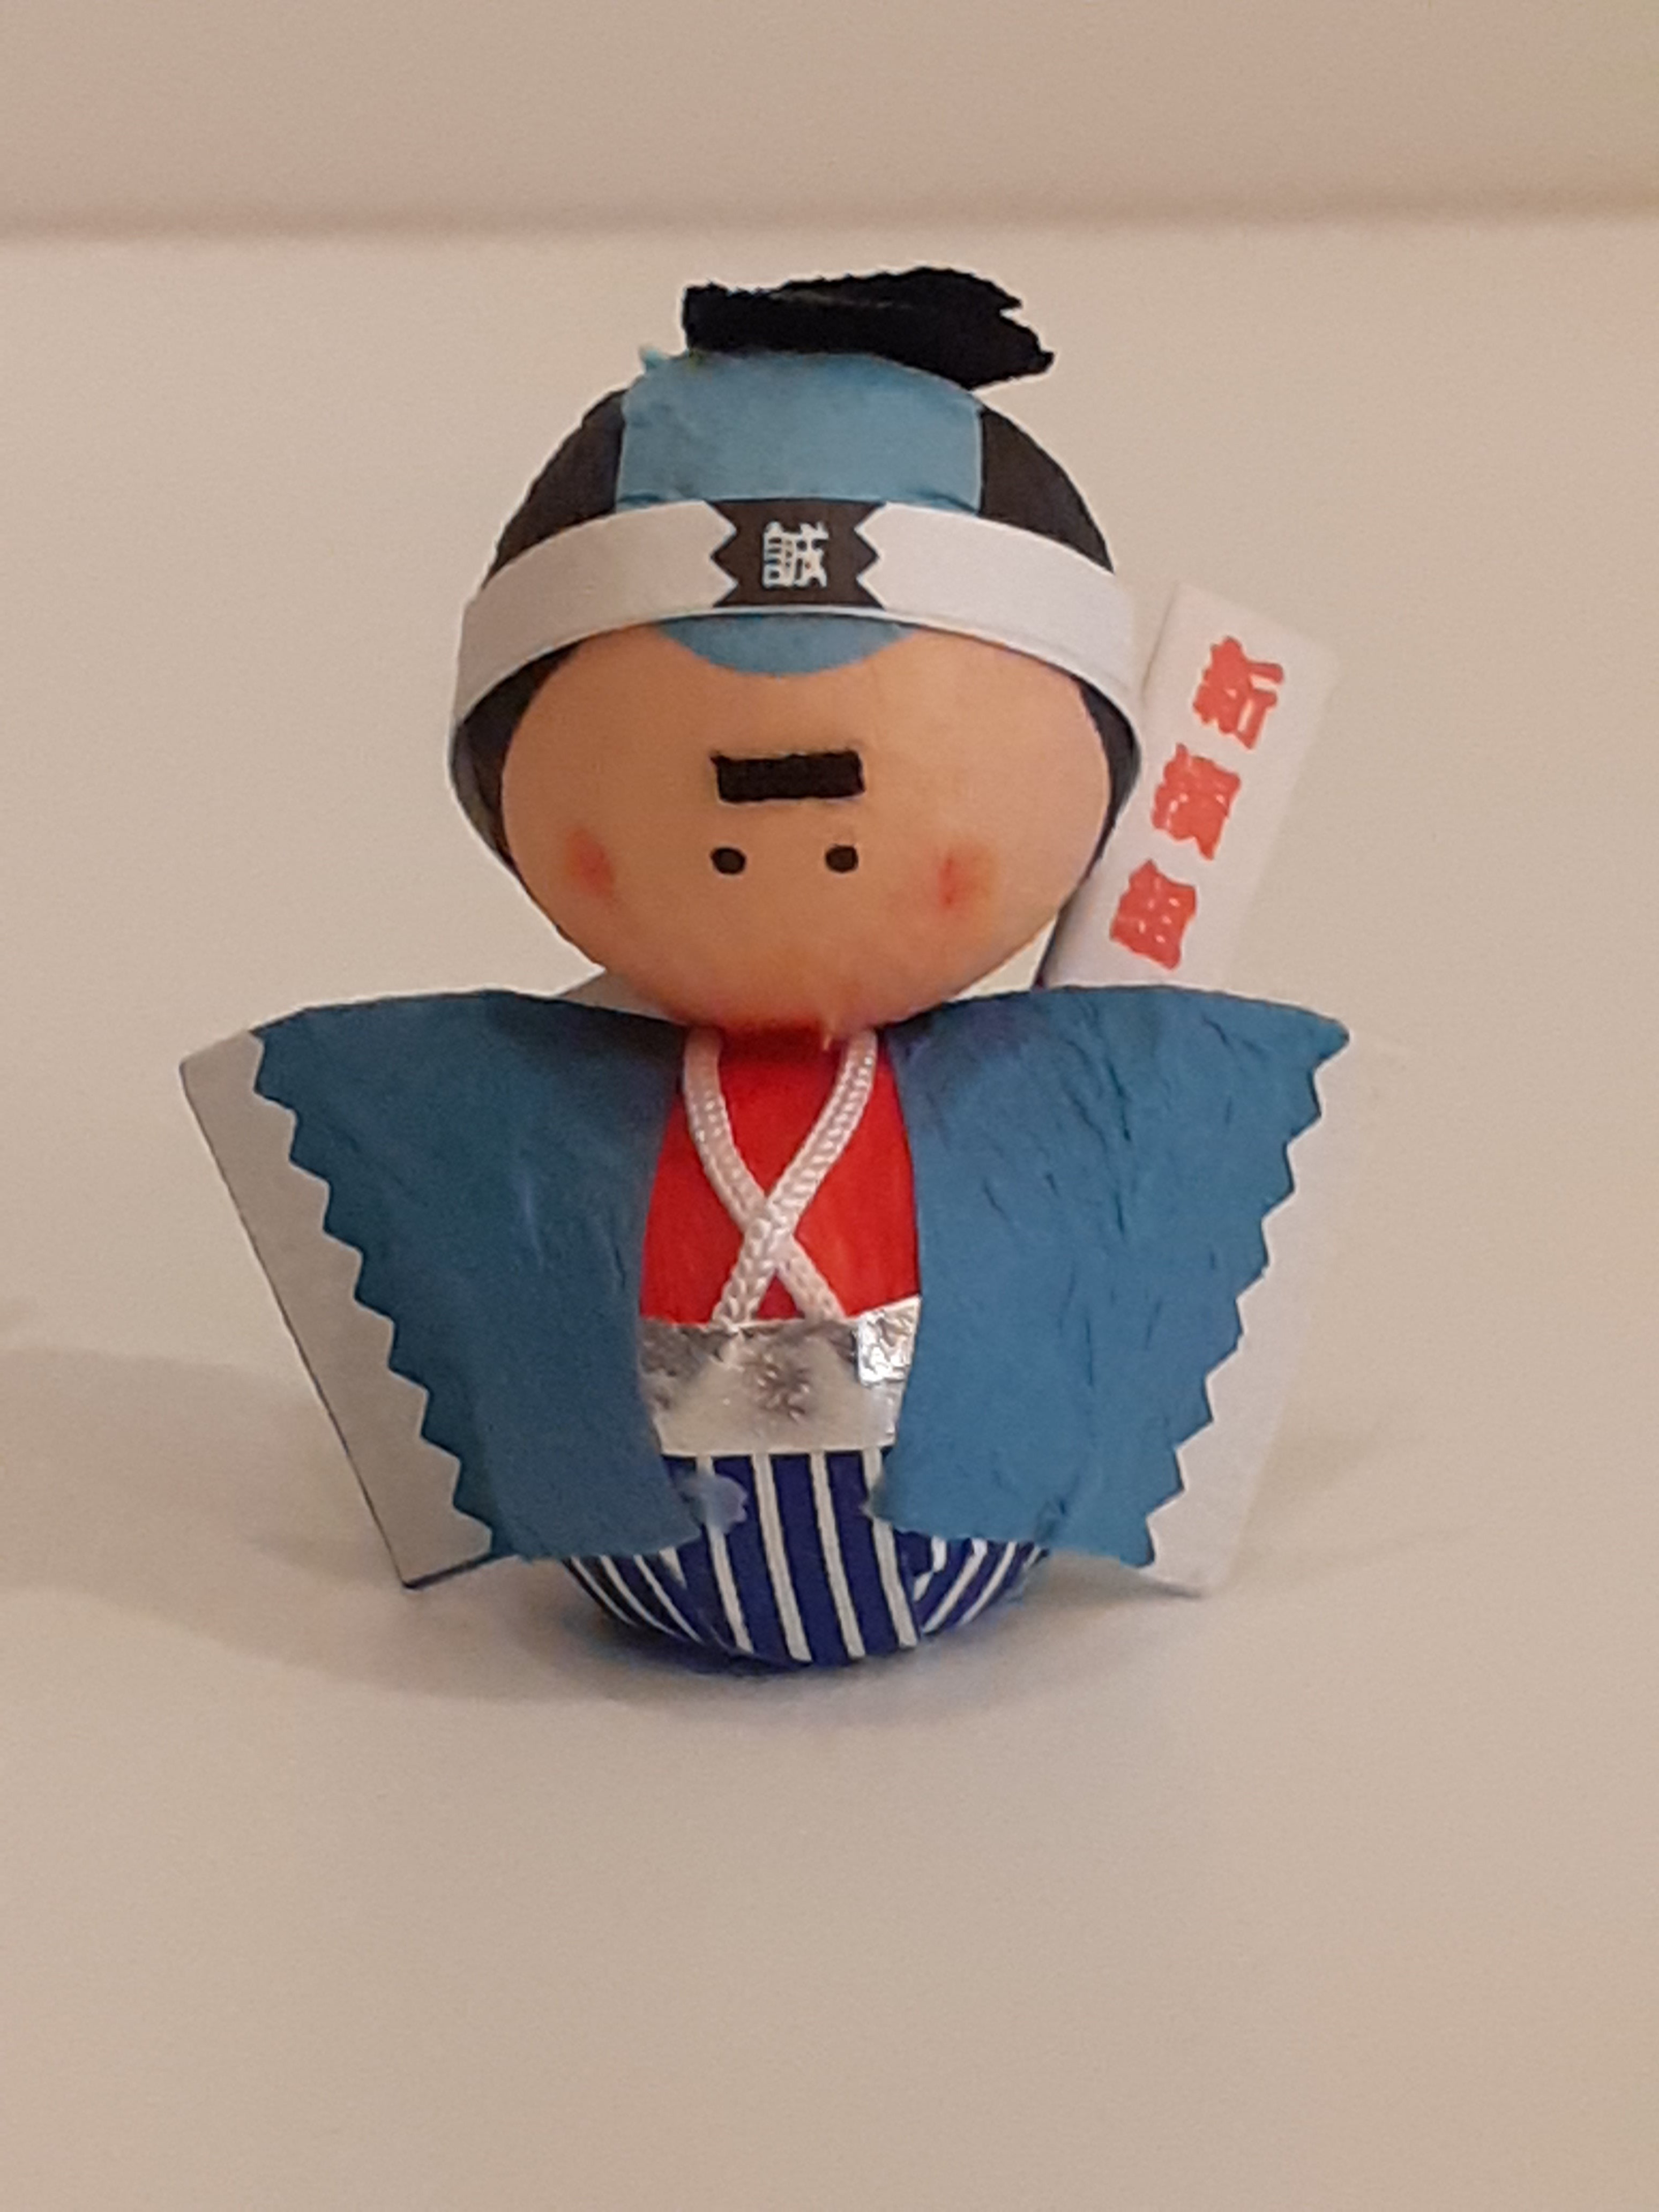 Okiagari "Samurai"